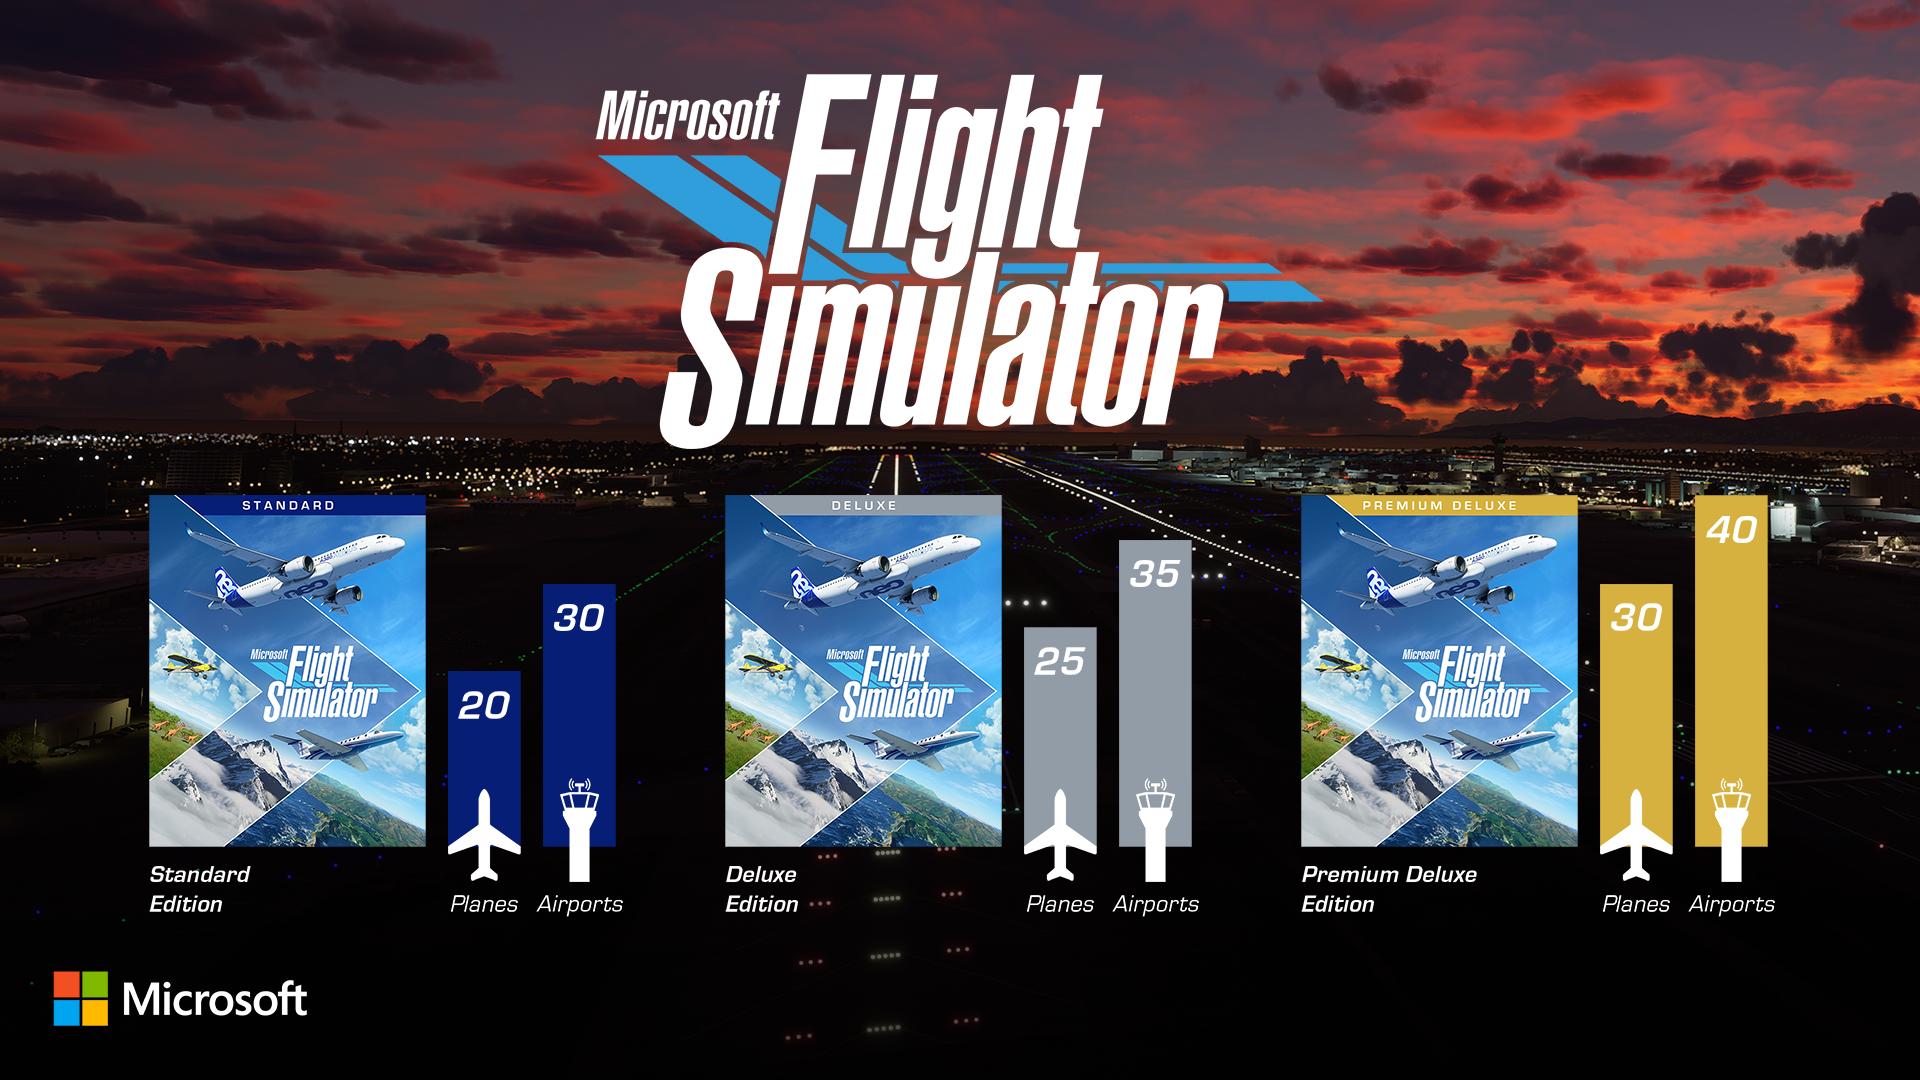 https://news.xbox.com/en-us/wp-content/uploads/sites/2/2020/07/Microsoft-Flight-Simulator_SKUs.png?w=1200